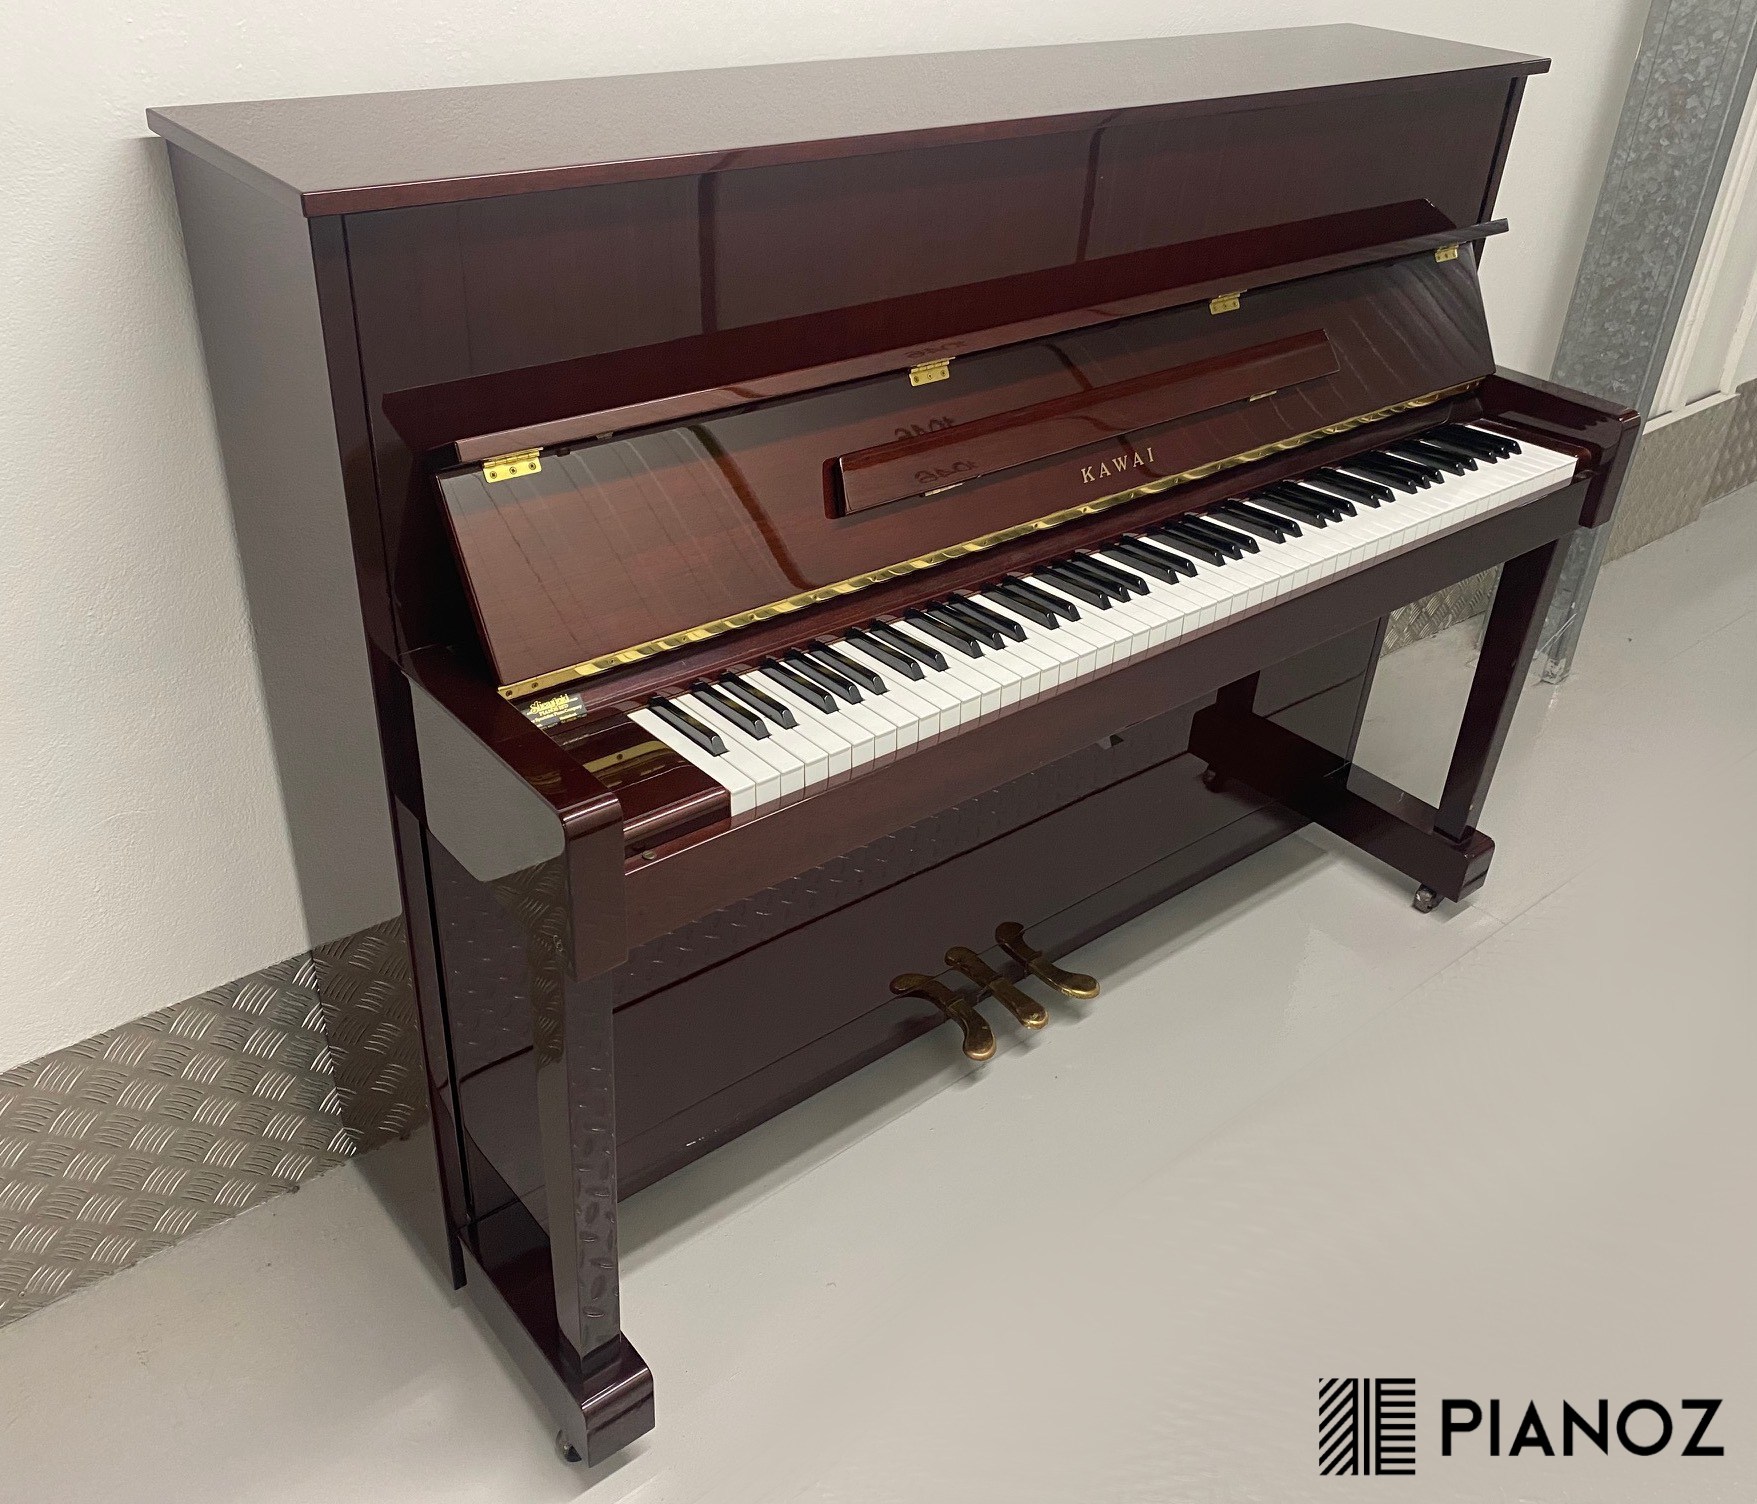 Kawai CX5 Upright Piano piano for sale in UK